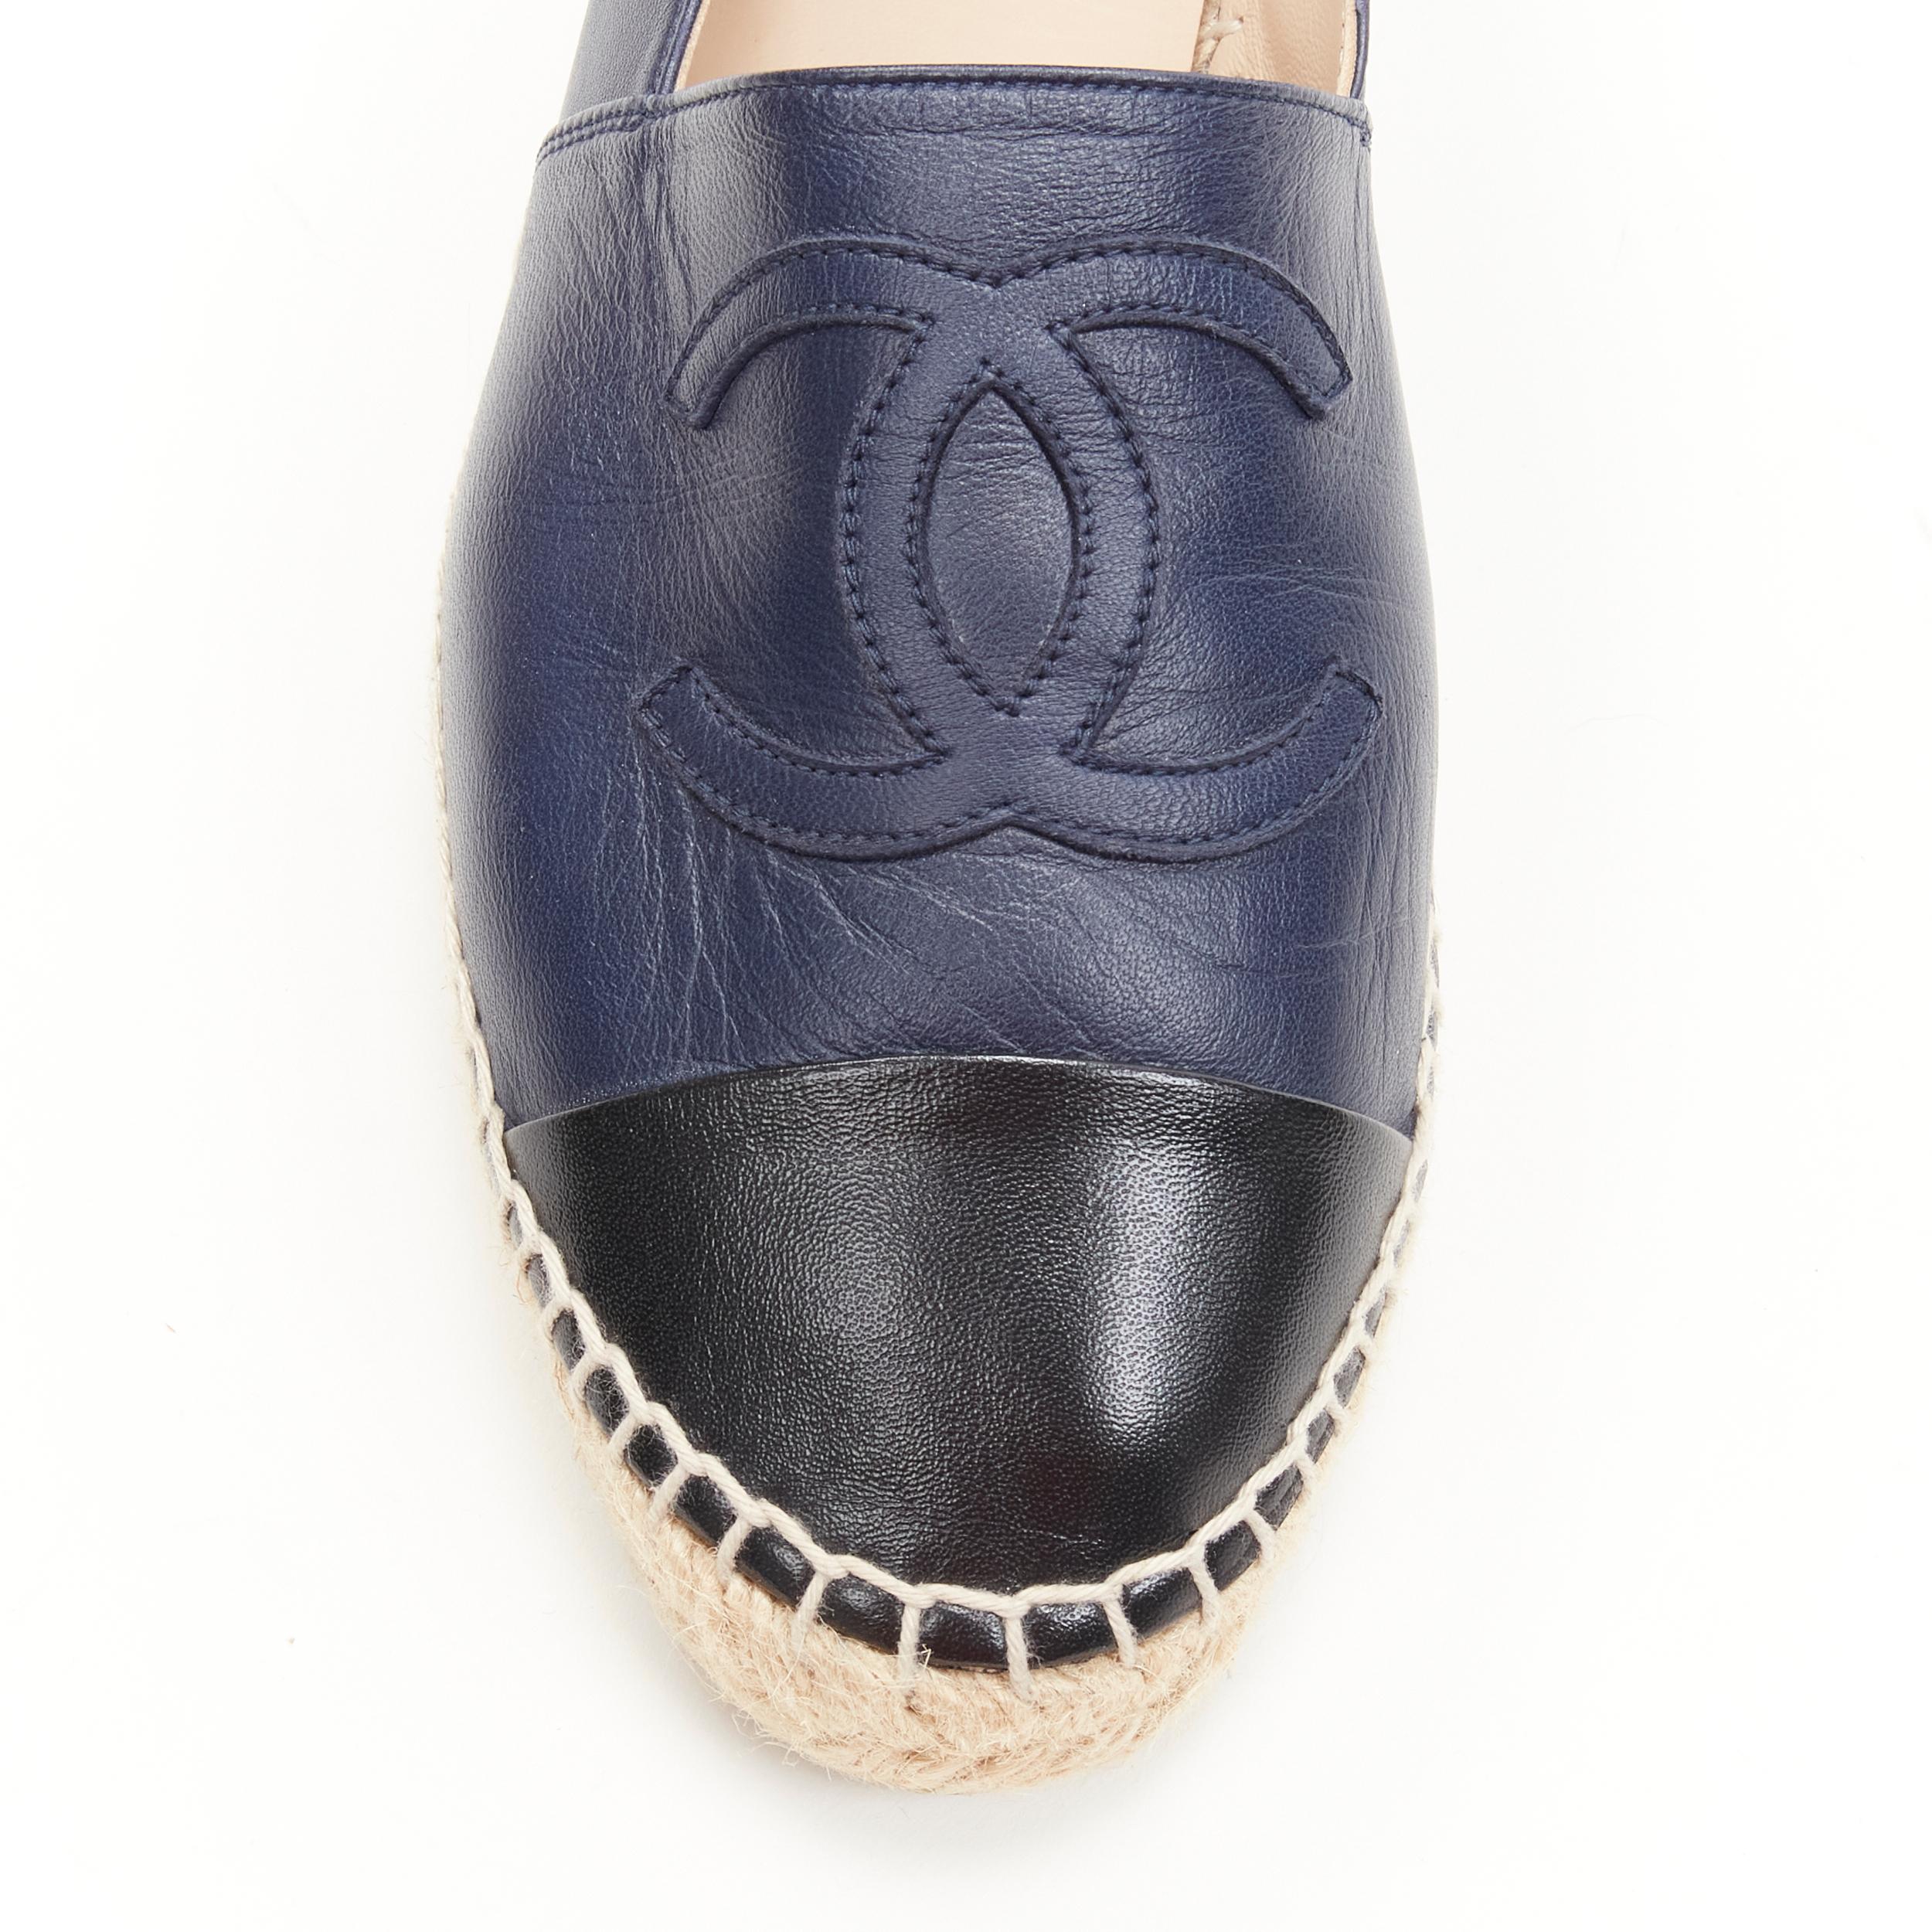 Gray CHANEL CC Logo navy lambskin leather jute espadrilles shoes EU38 US8